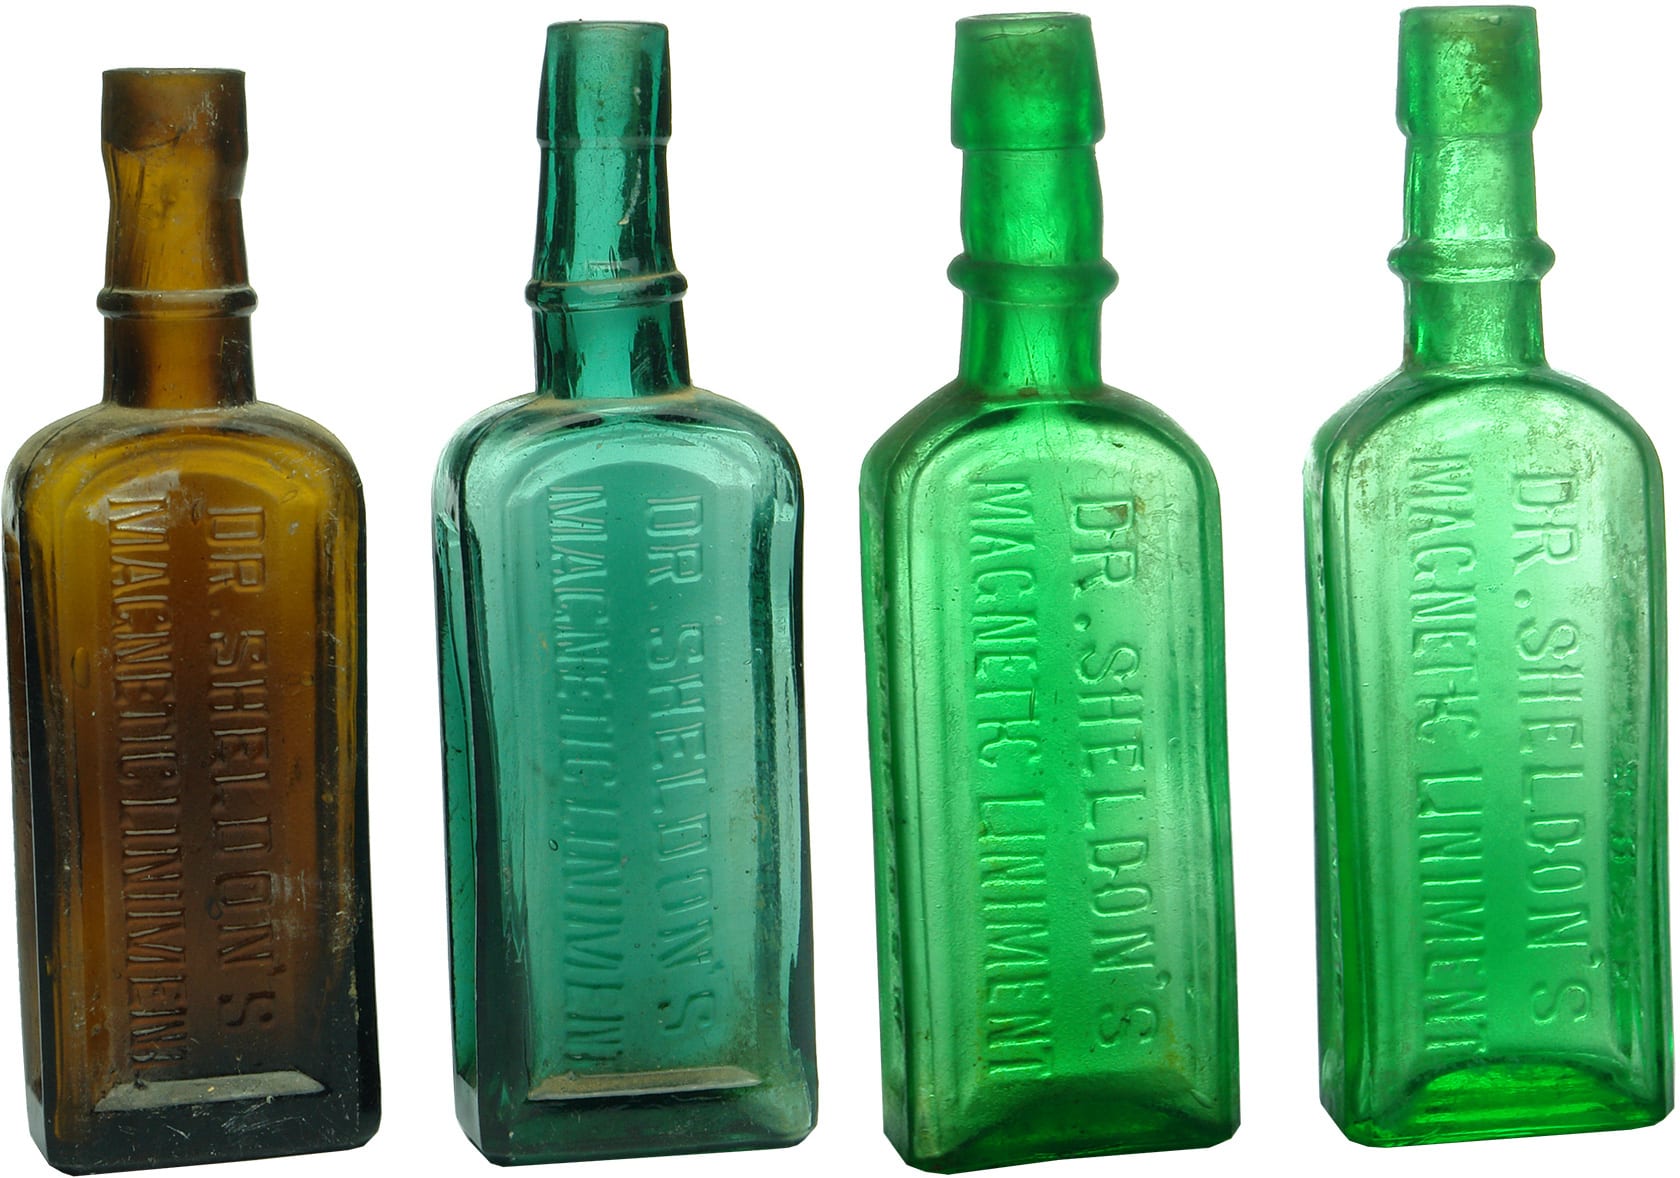 Antique Sheldon's Magnetic Liniment Bottles